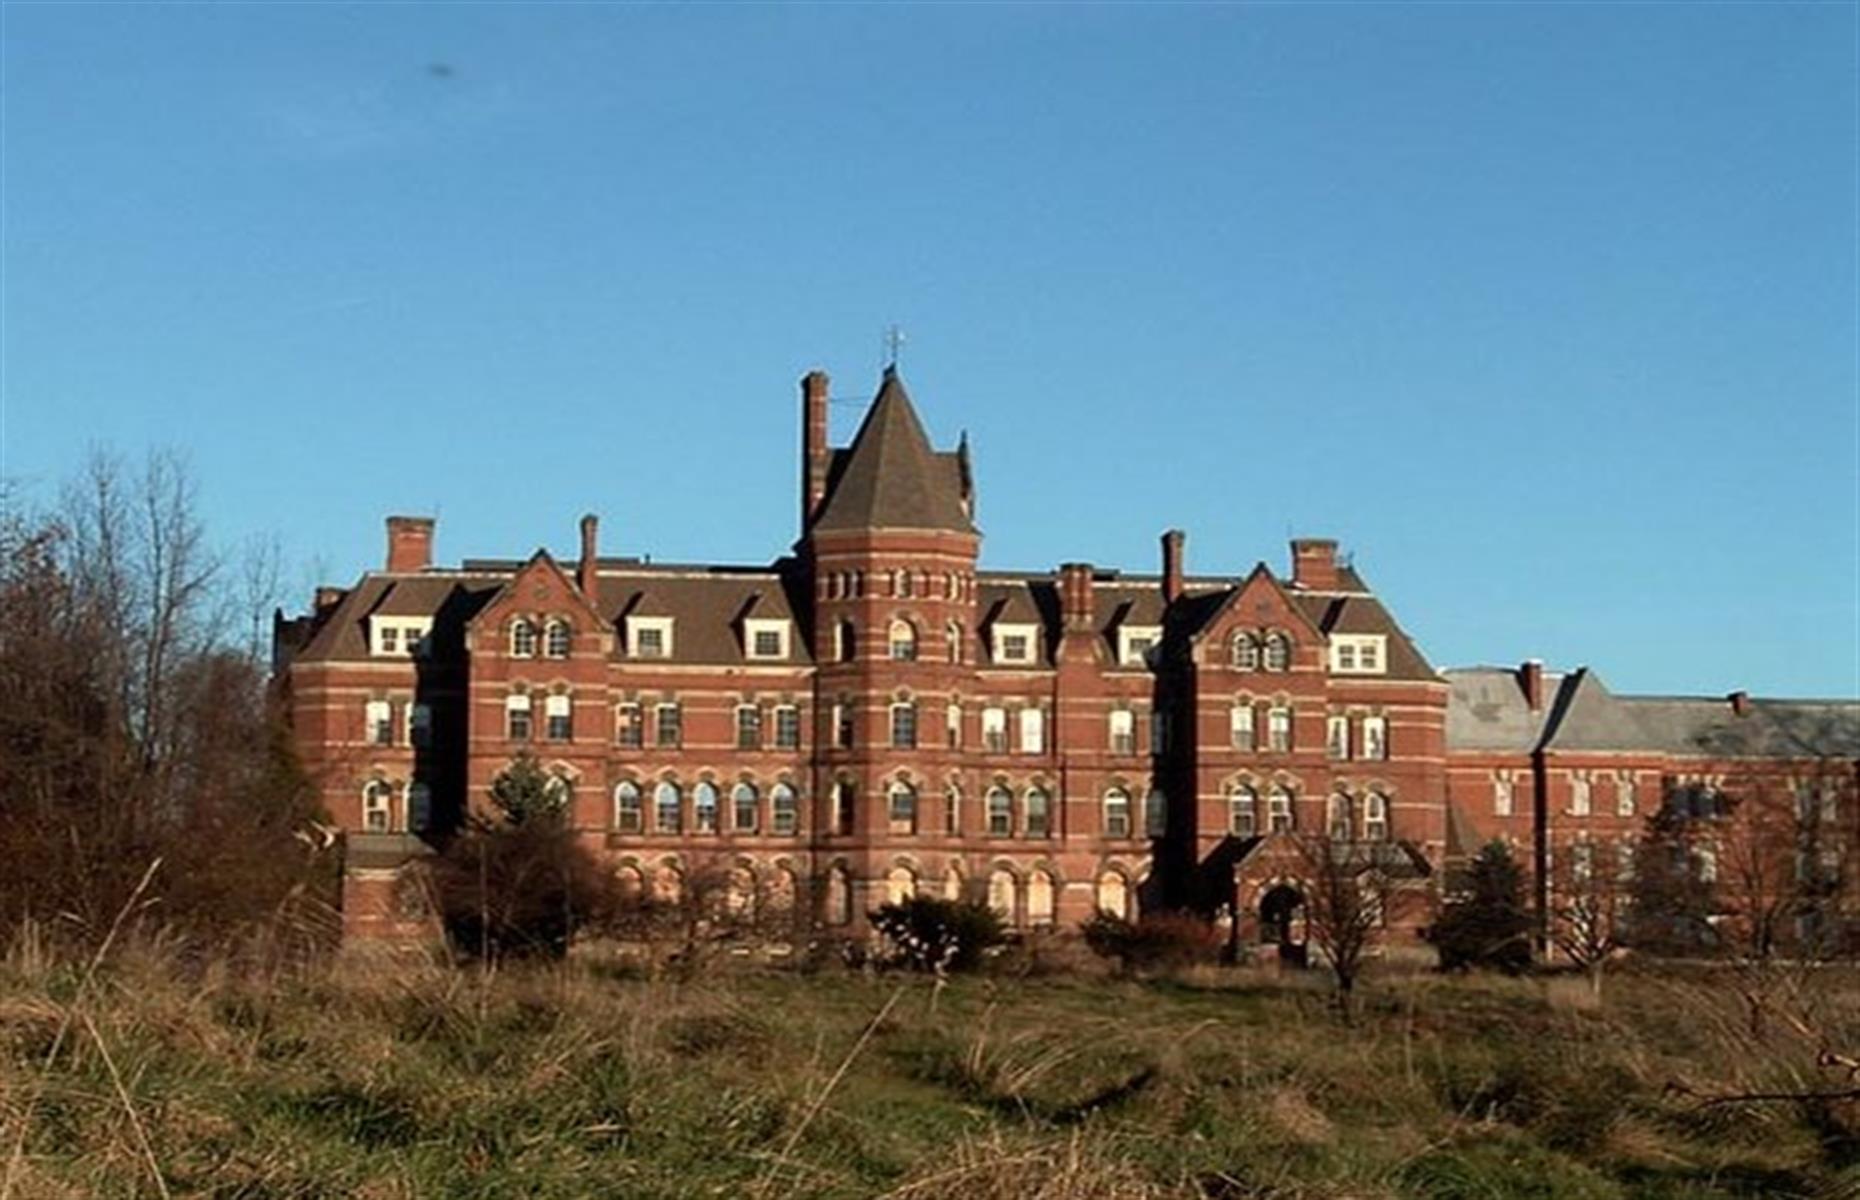 Hudson River State Hospital, New York, USA